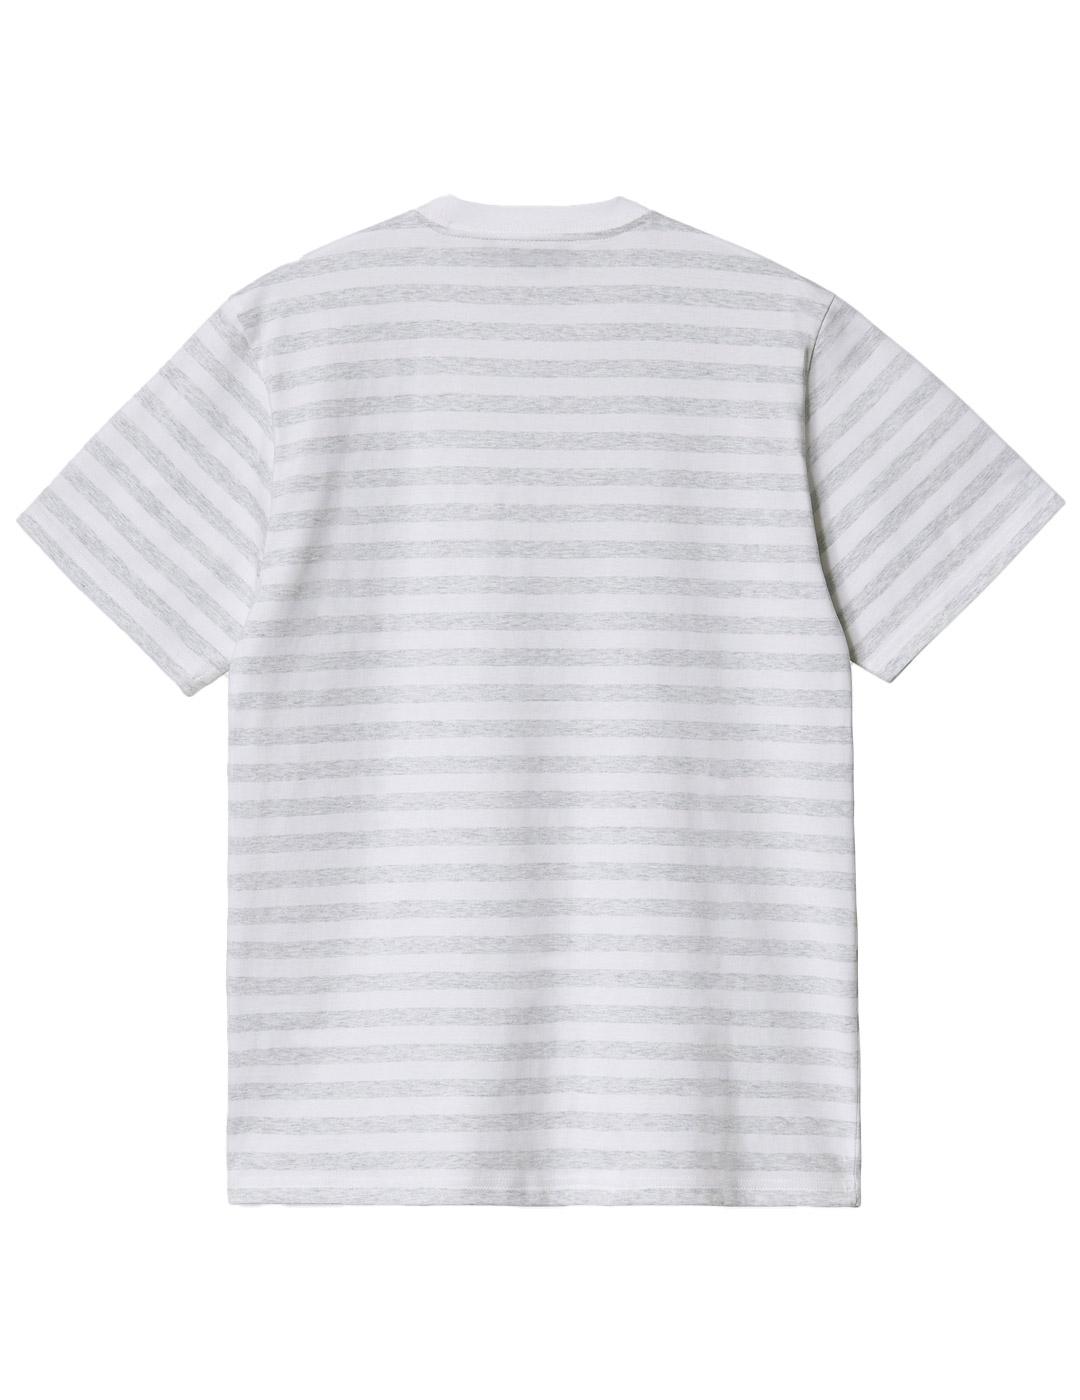 Camiseta Carhartt Scoty Pocket Blanco/Gris